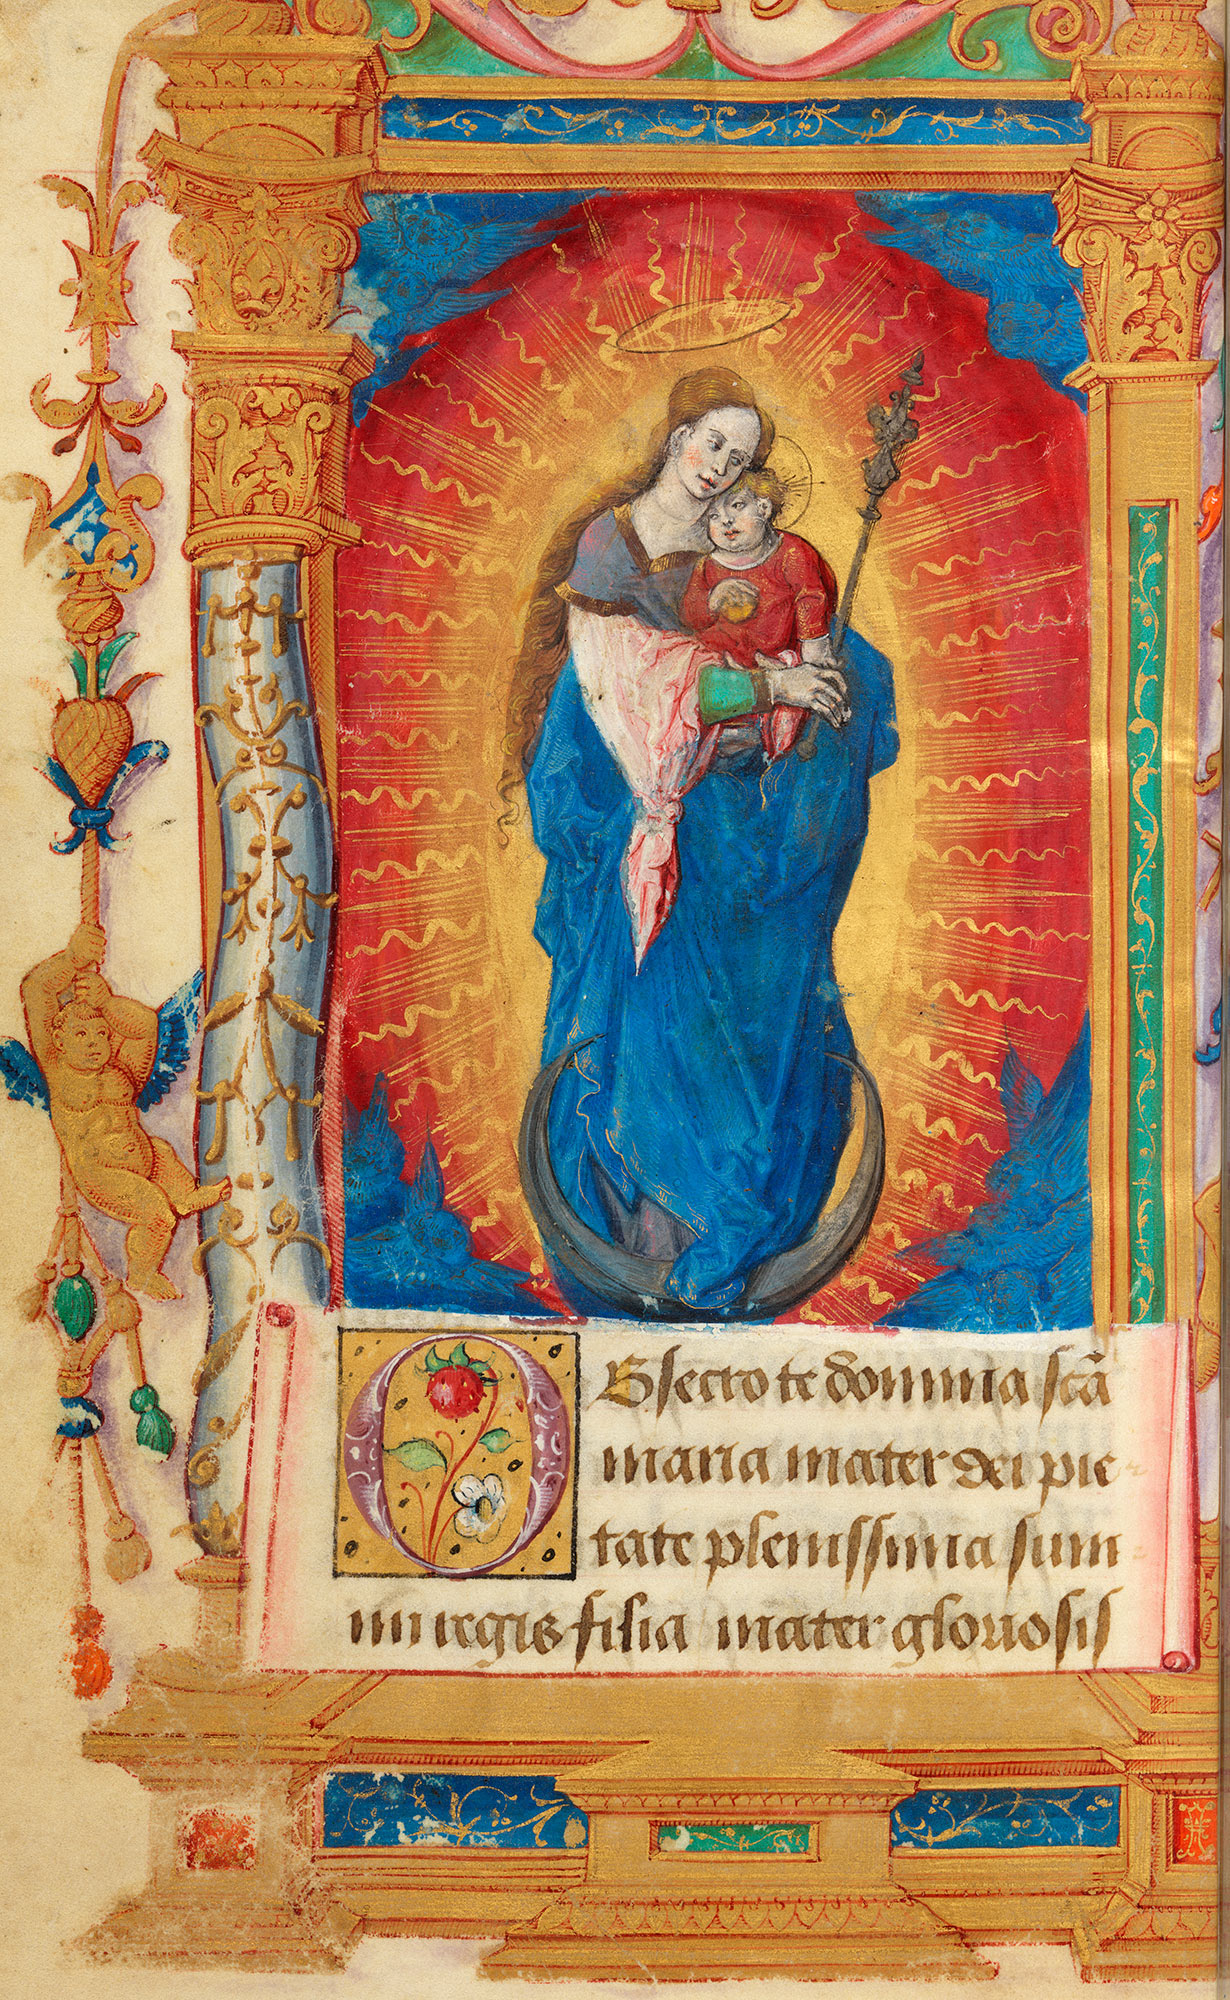 An illuminated manuscript.